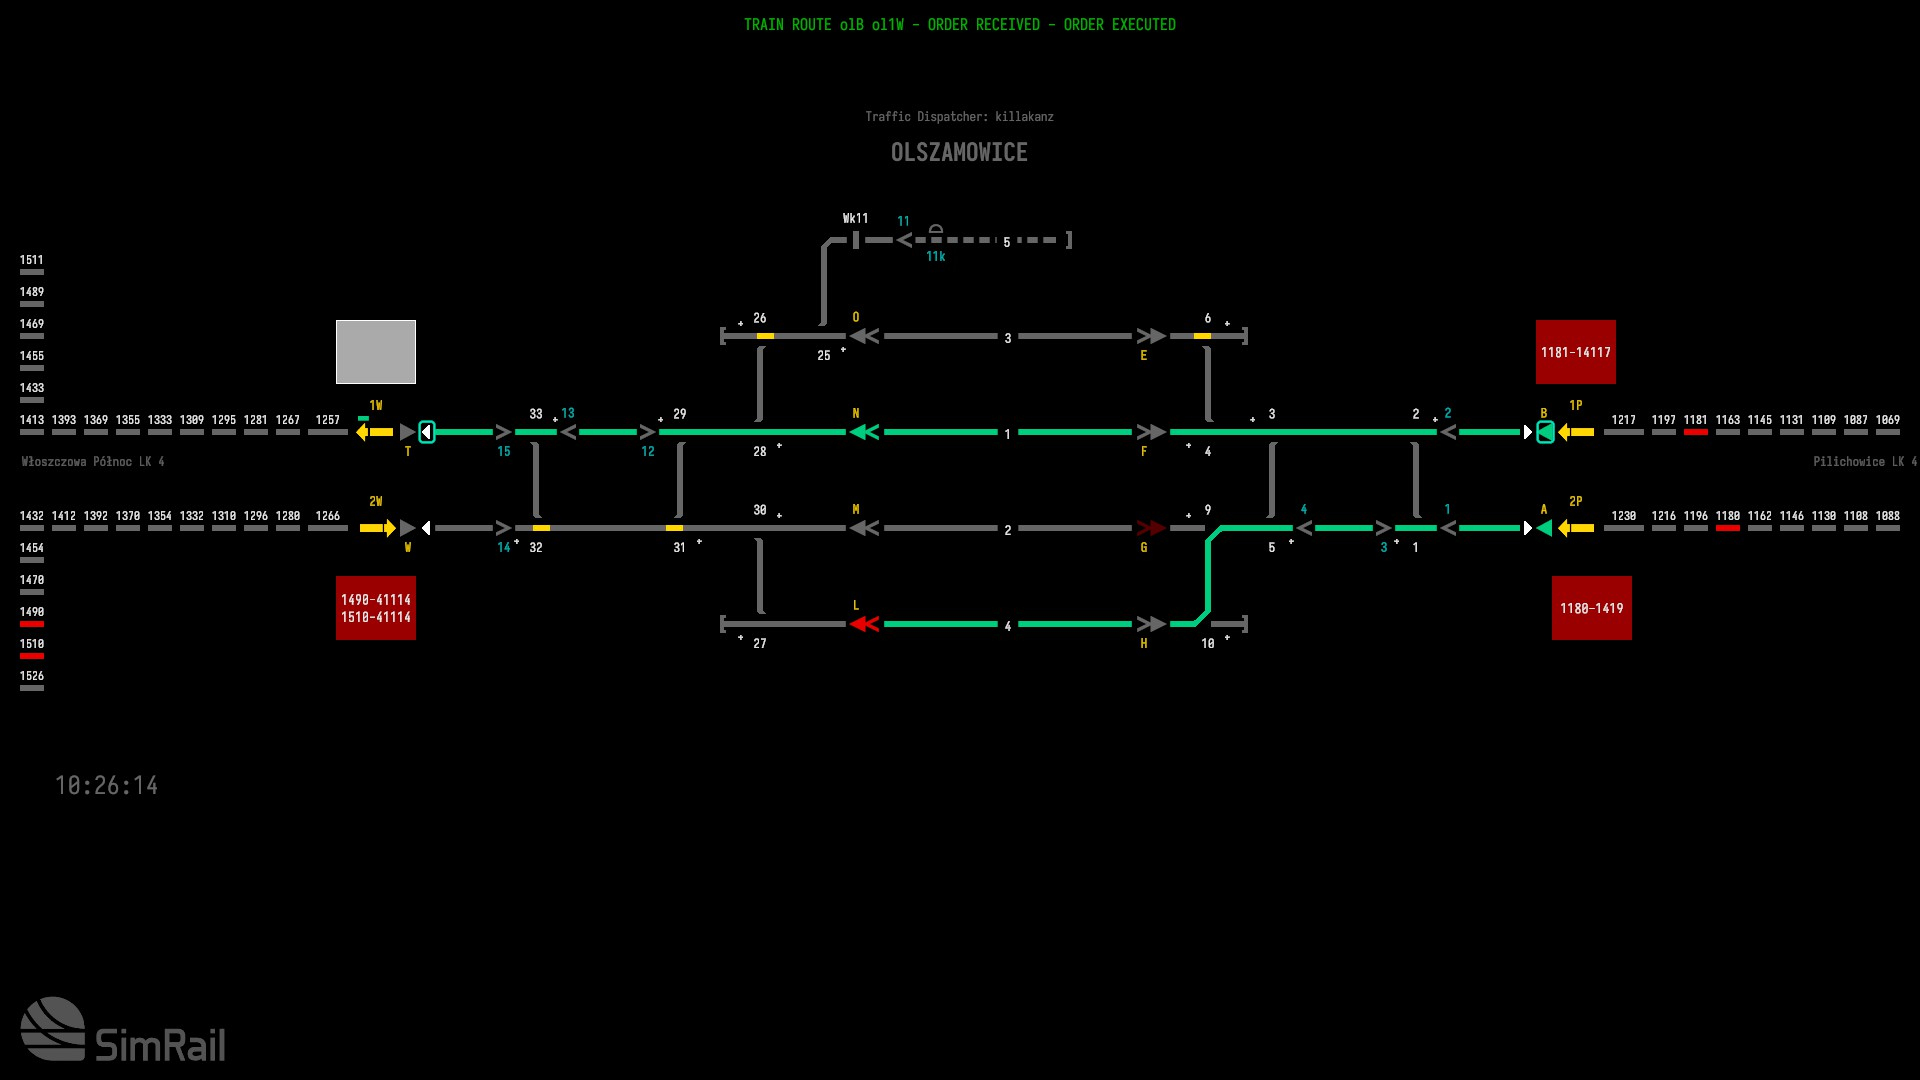 SimRail - The Railway Simulator - Basic Dispatching Full Guide - Computerised signalling - 859FA4C